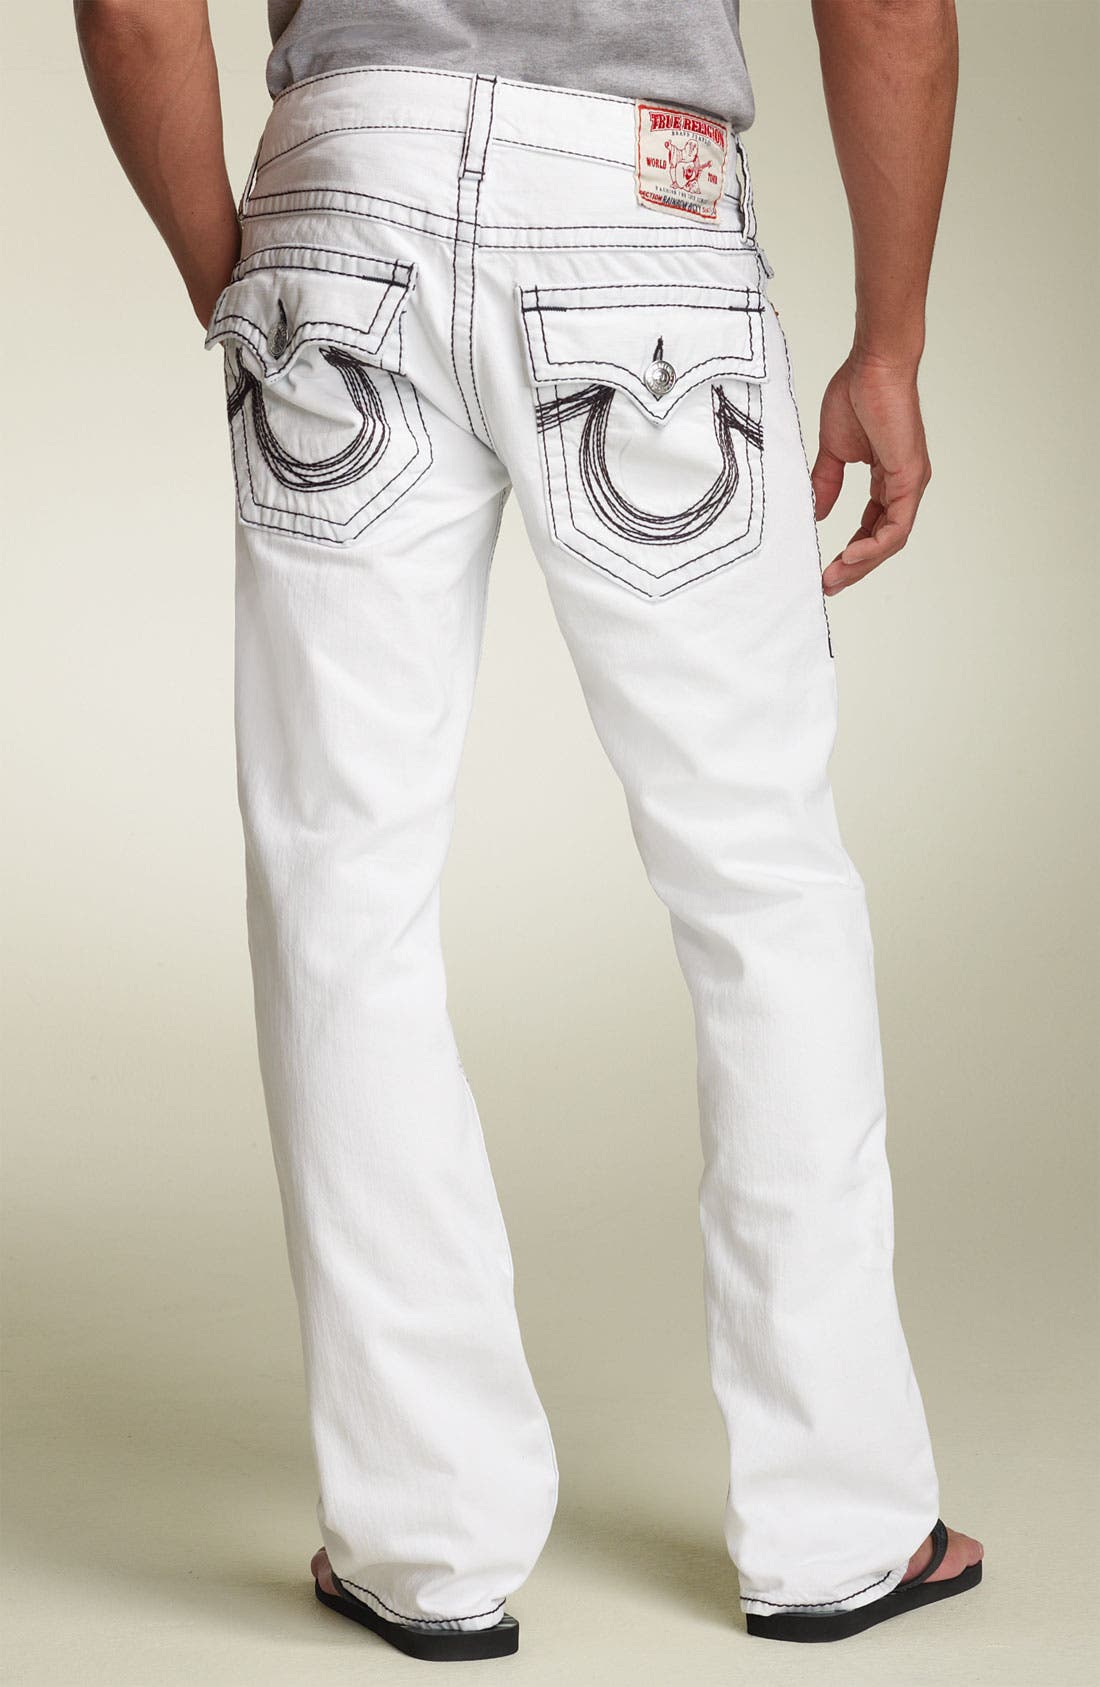 true religion pants white